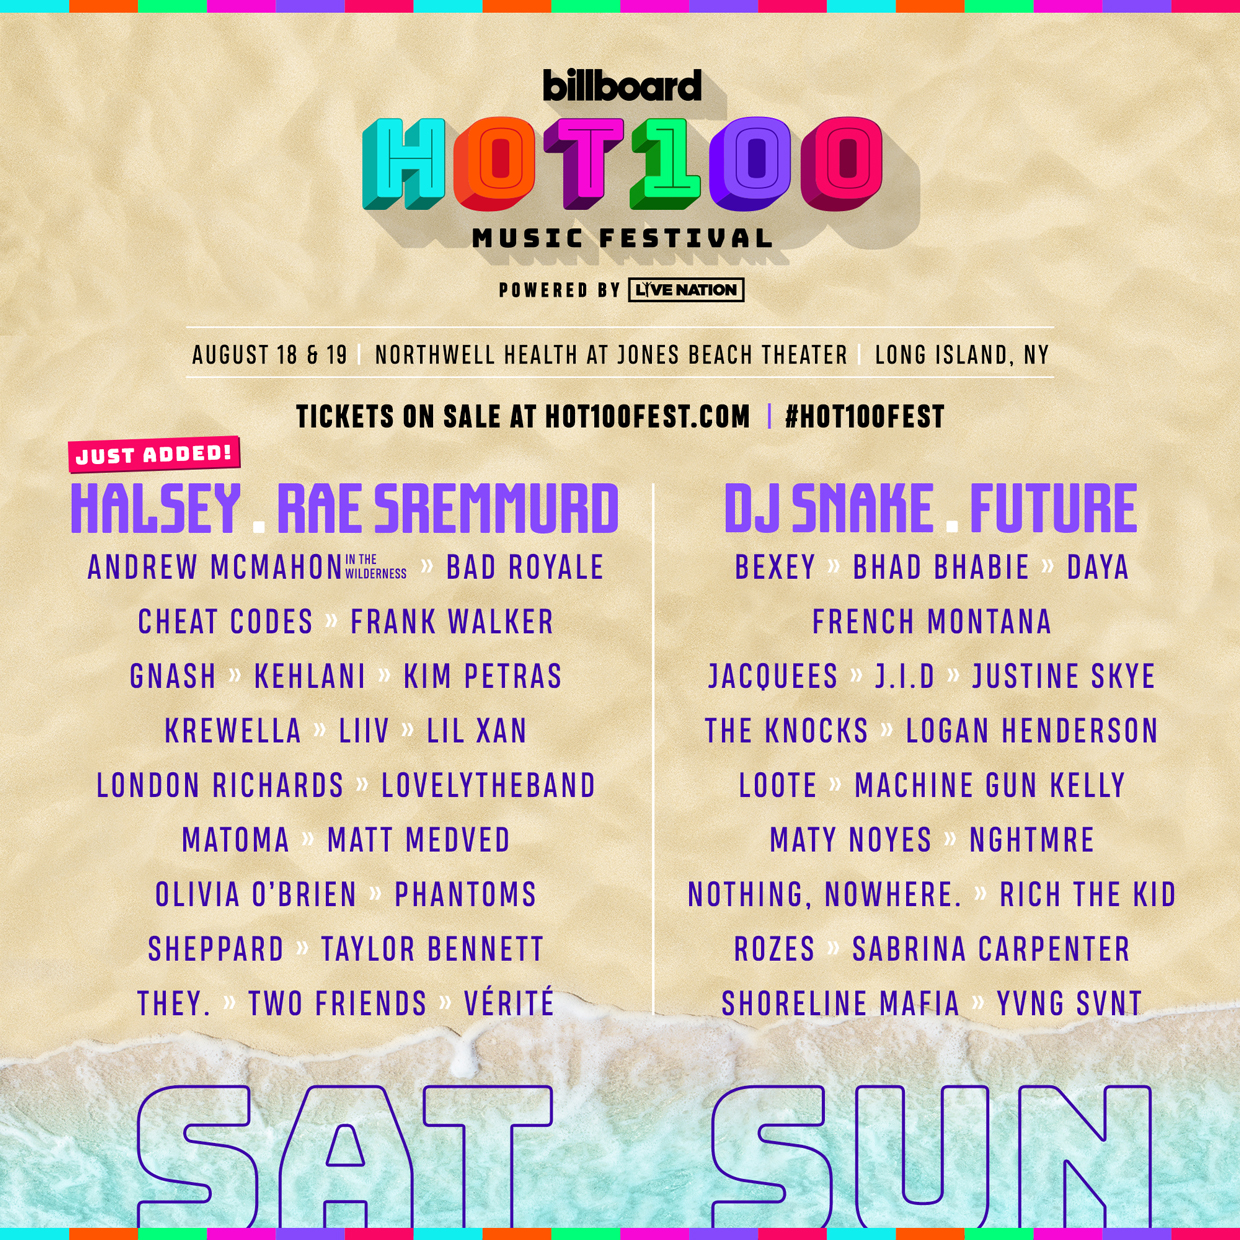 Halsey Announced as Billboard Hot 100 Music Festival Headliner